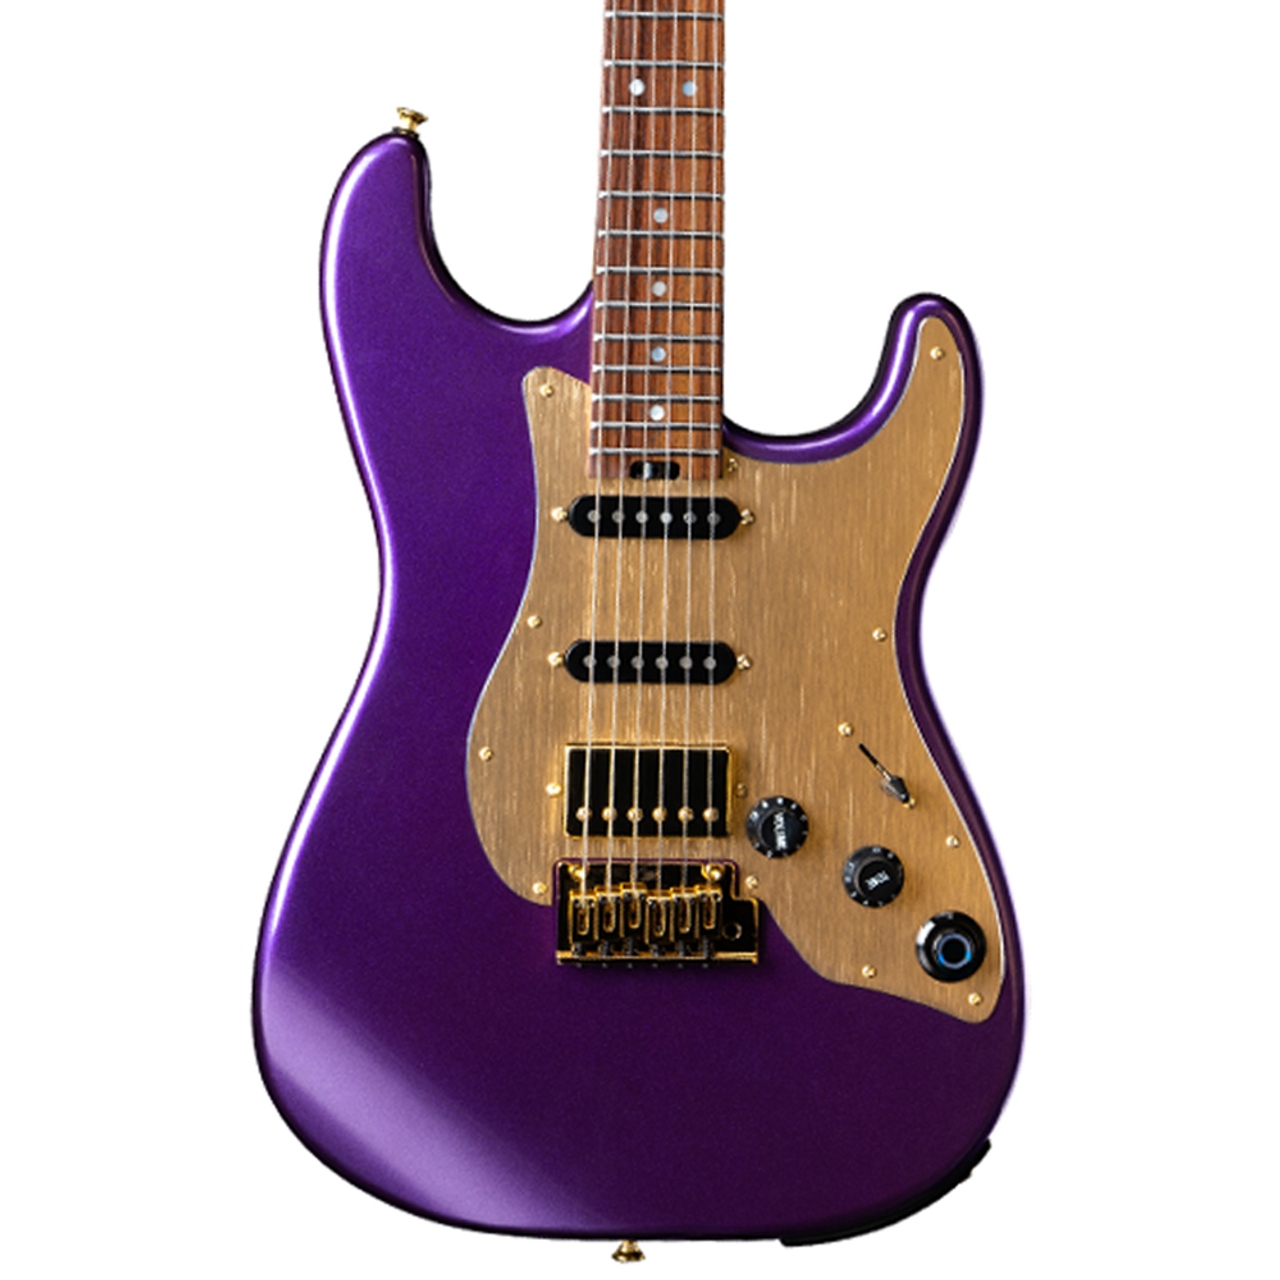 Mooer GTRS S900 Intelligent Guitar (Plum Purple)